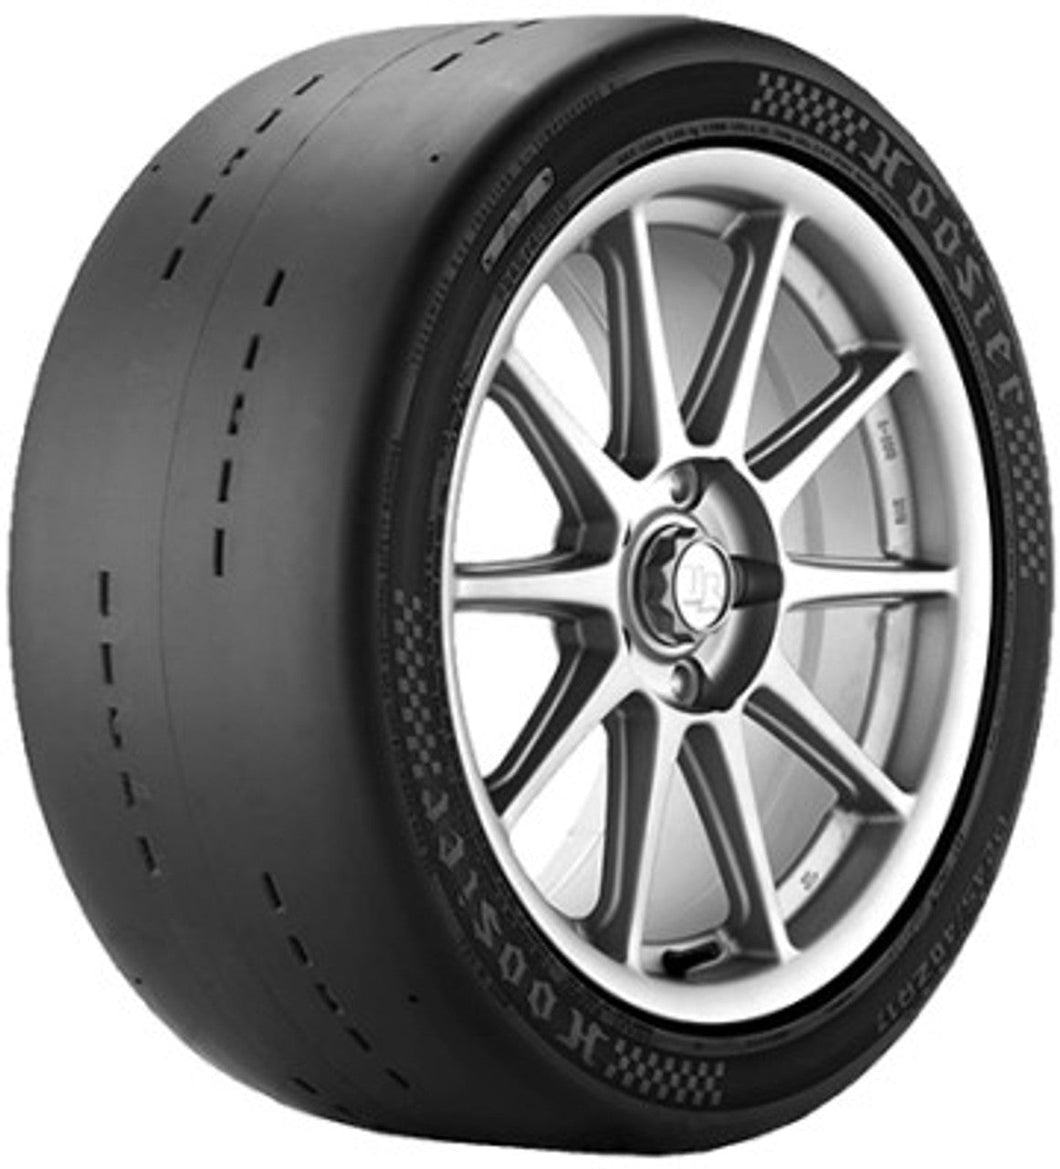 315/30 ZR18 Hoosier Tire Slick D.O.T Neumático